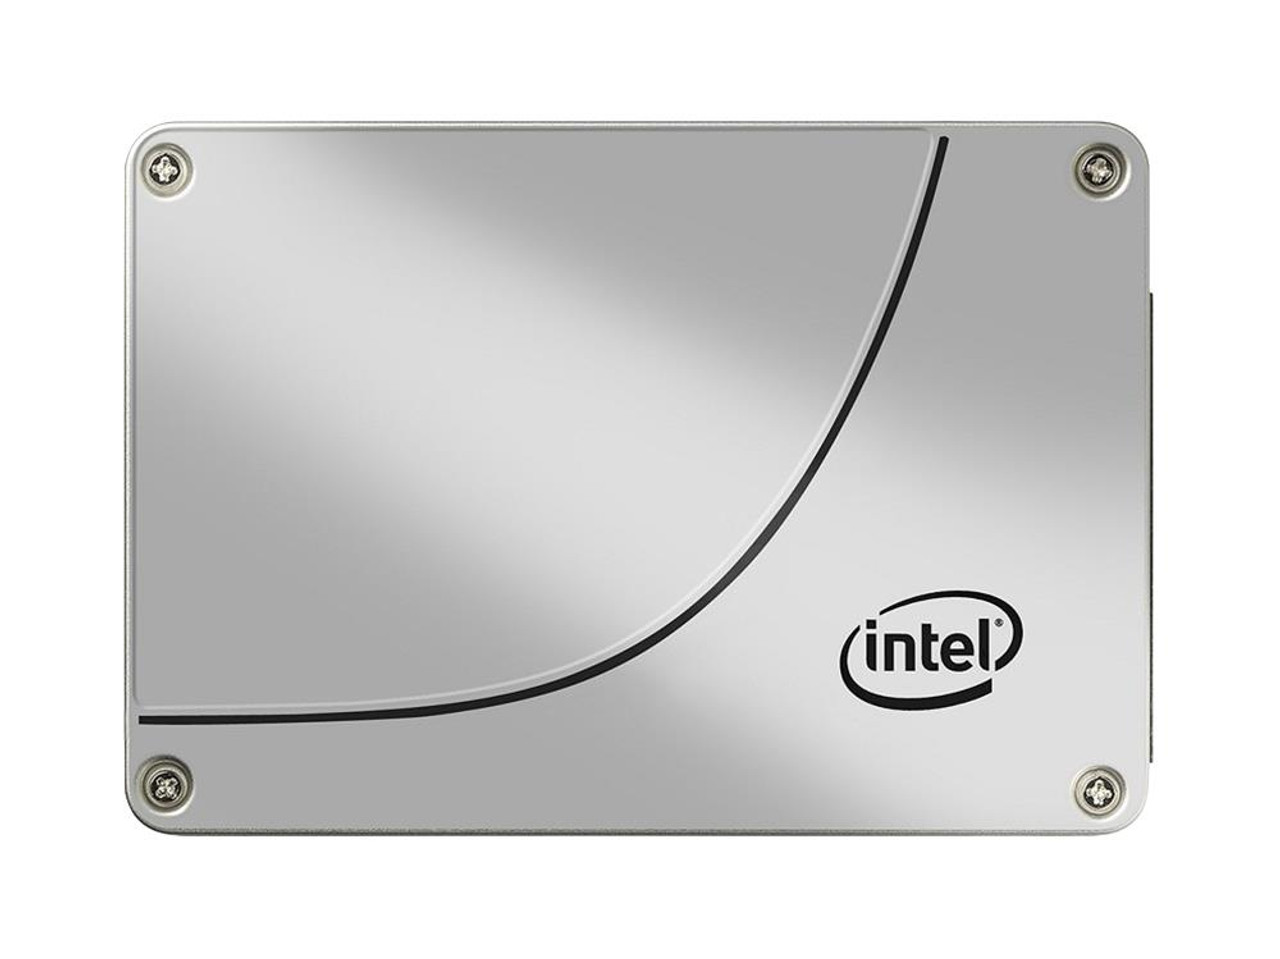 1356013 Intel 320 Series 80GB MLC SATA 3Gbps 2.5-inch Internal Solid State Drive (SSD)